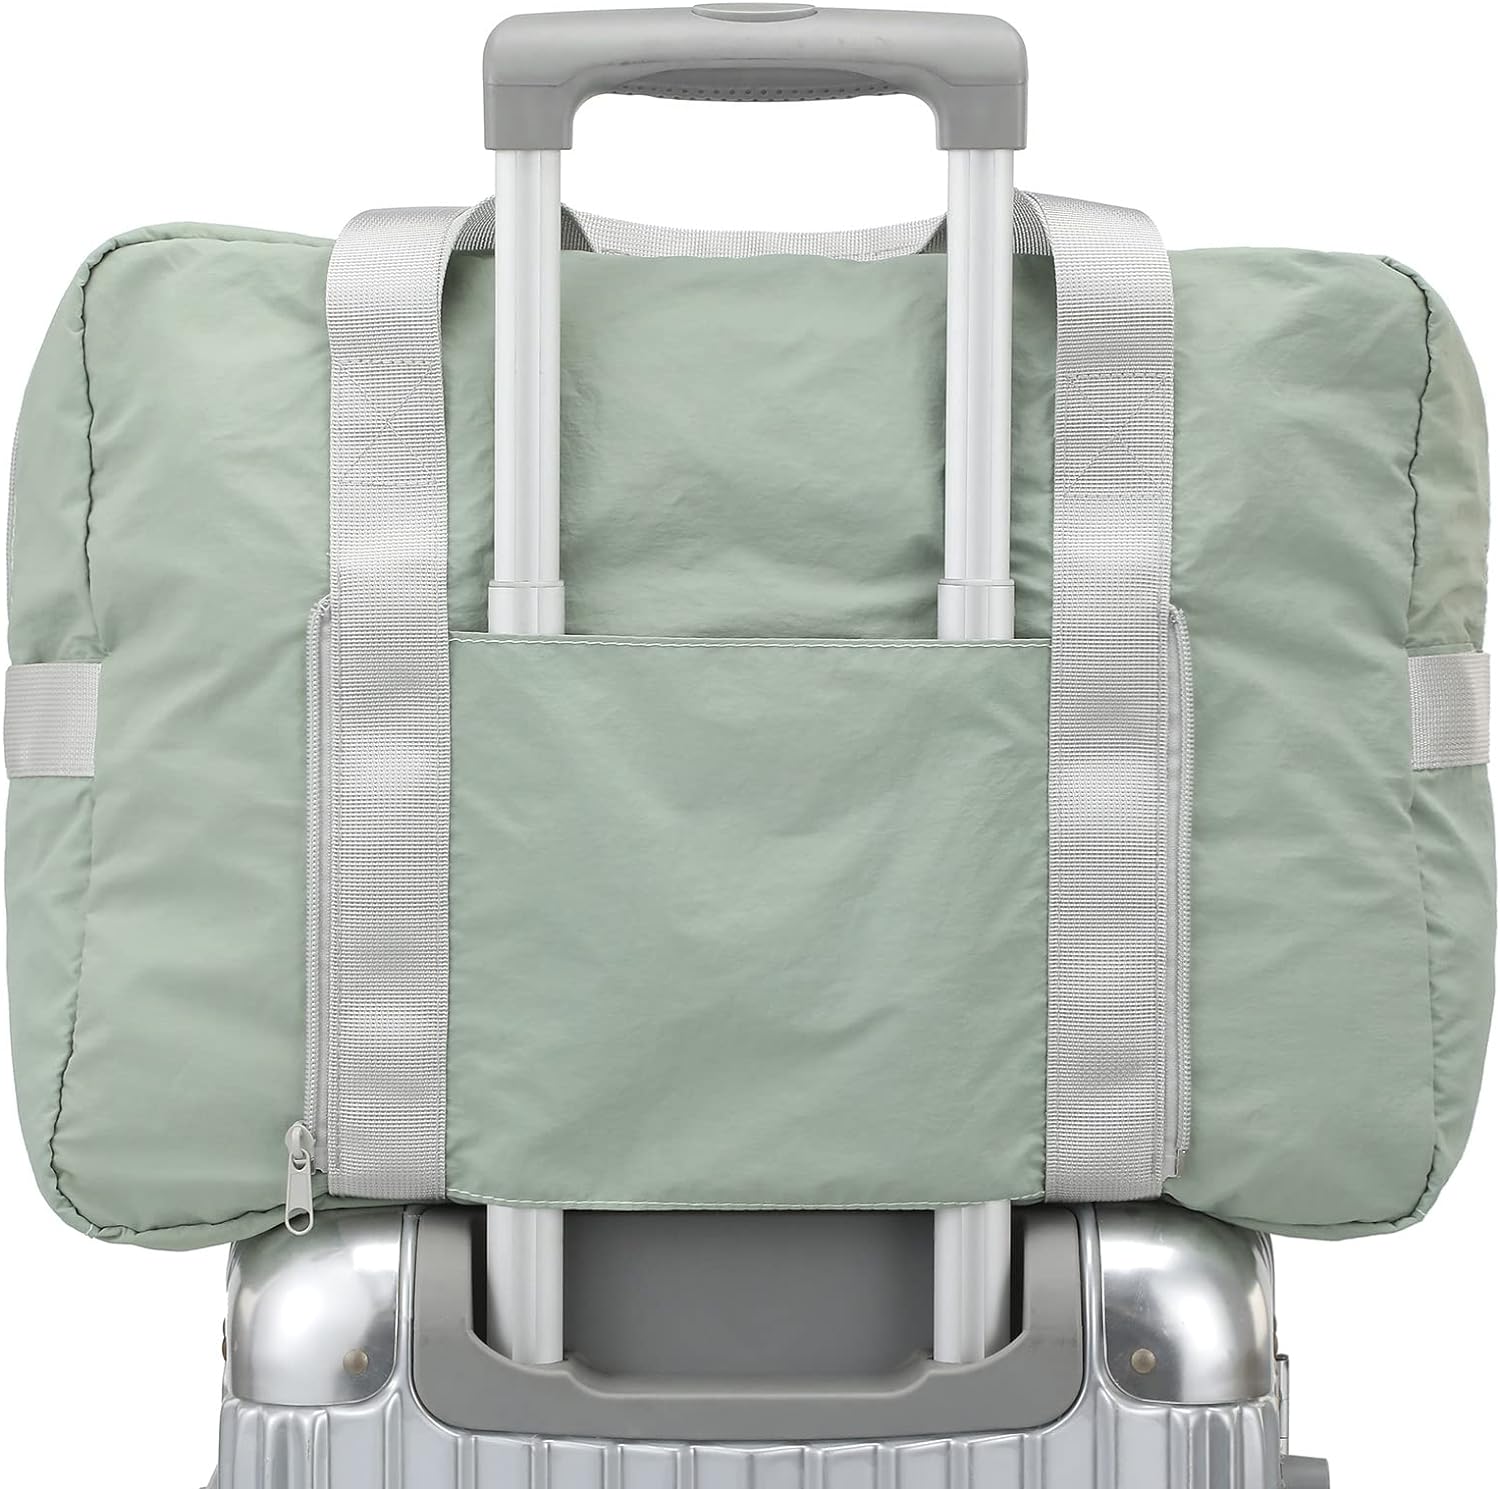 P.Travel Foldable Travel Sports Gym Duffel Bag